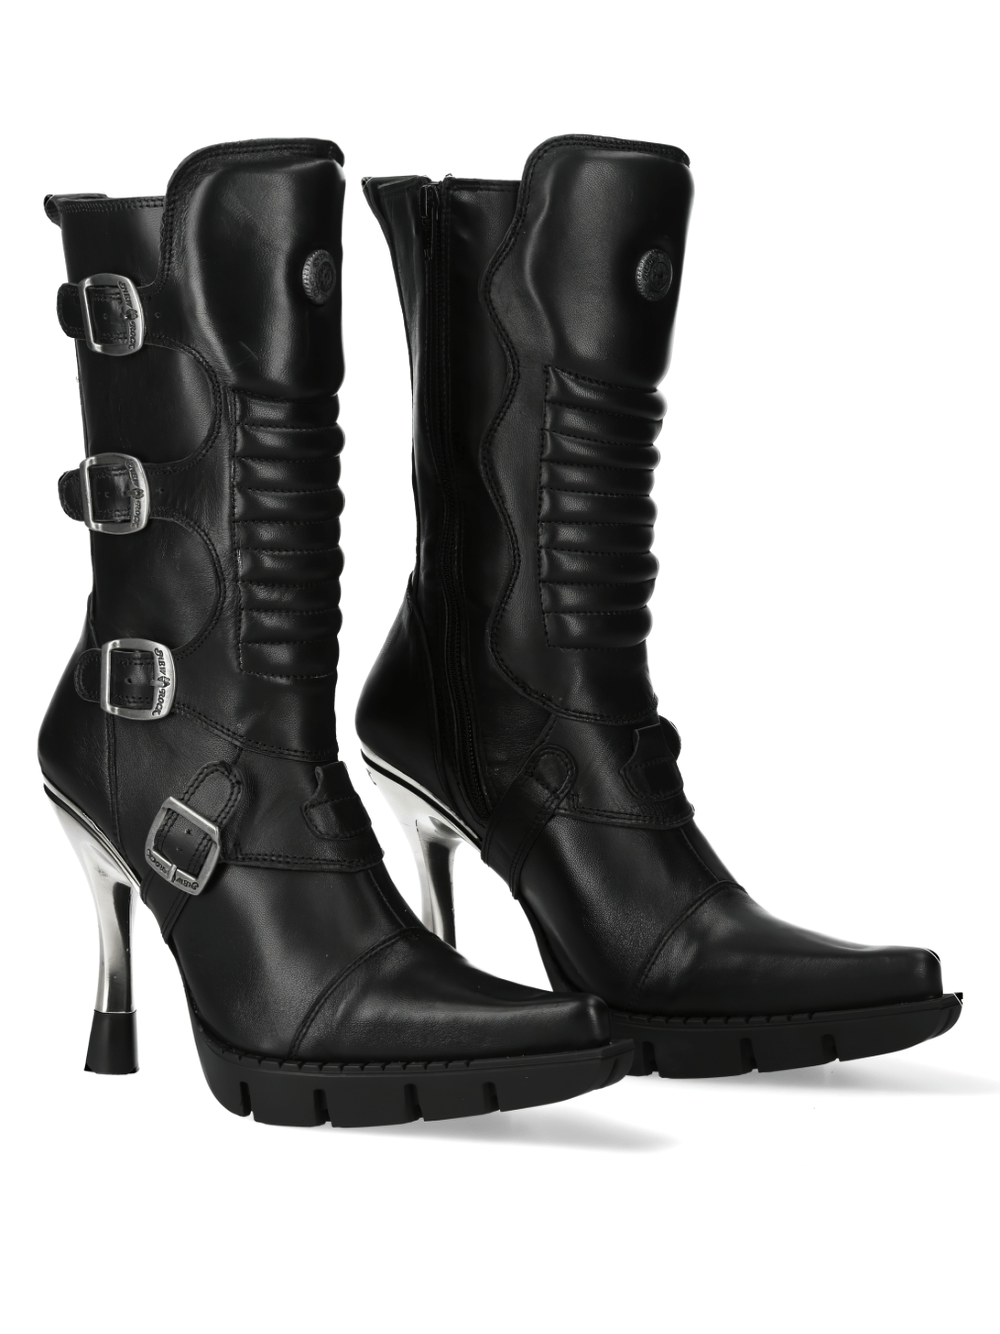 NEW ROCK Black High-Heel Urban Boots With Buckles